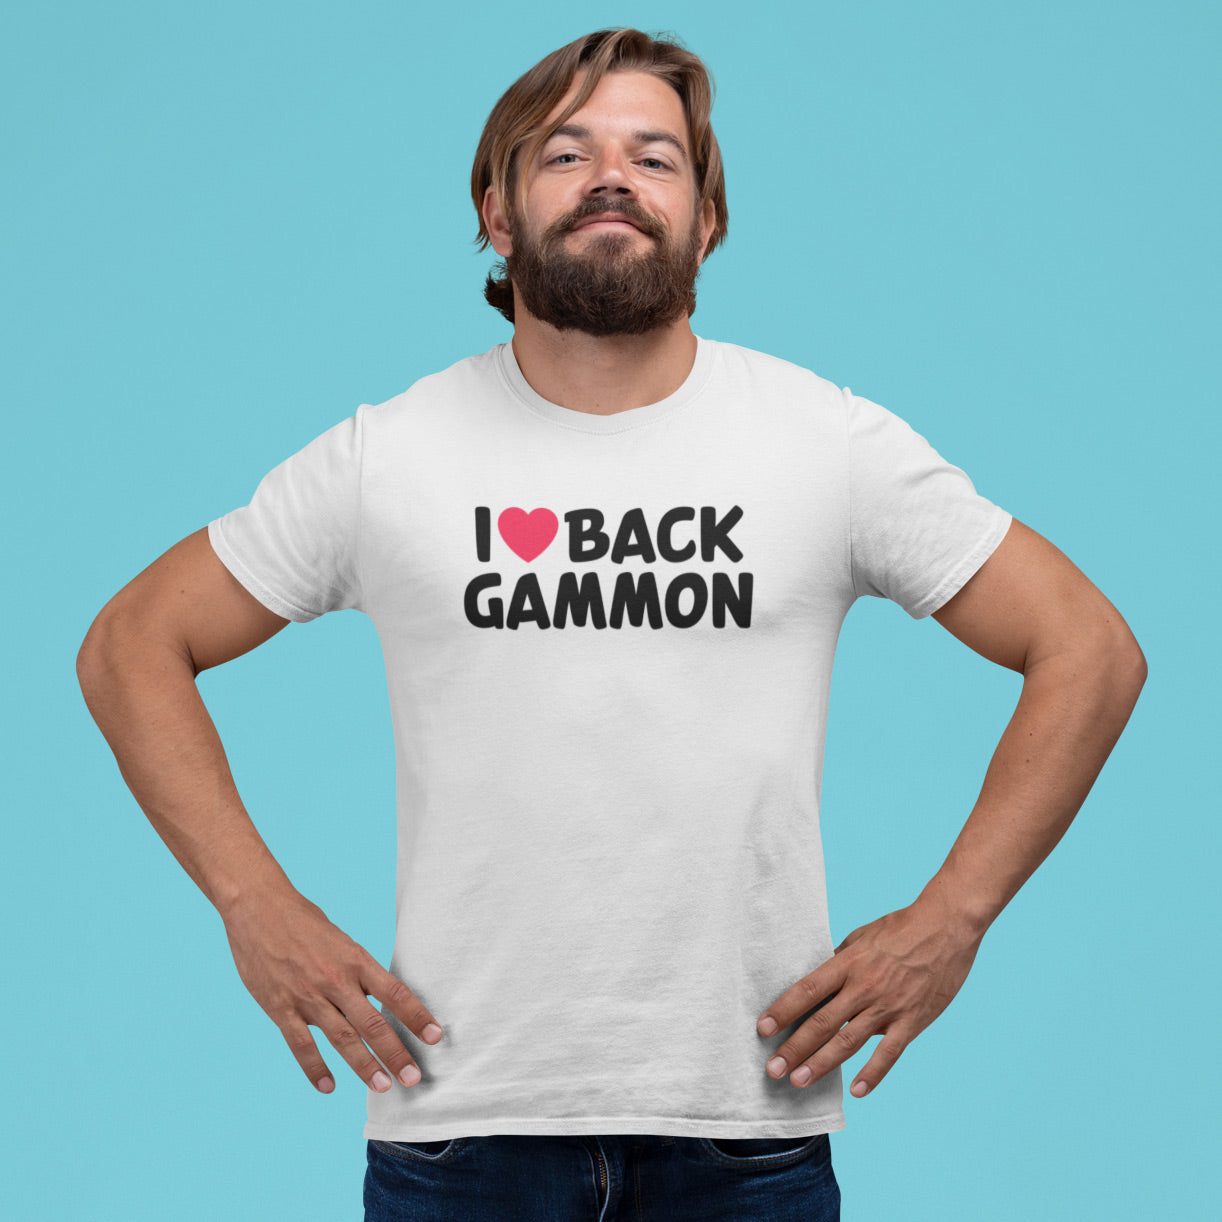 I Love Backgammon, Unisex T-shirt - Backgammon Galaxy White / S T-shirt